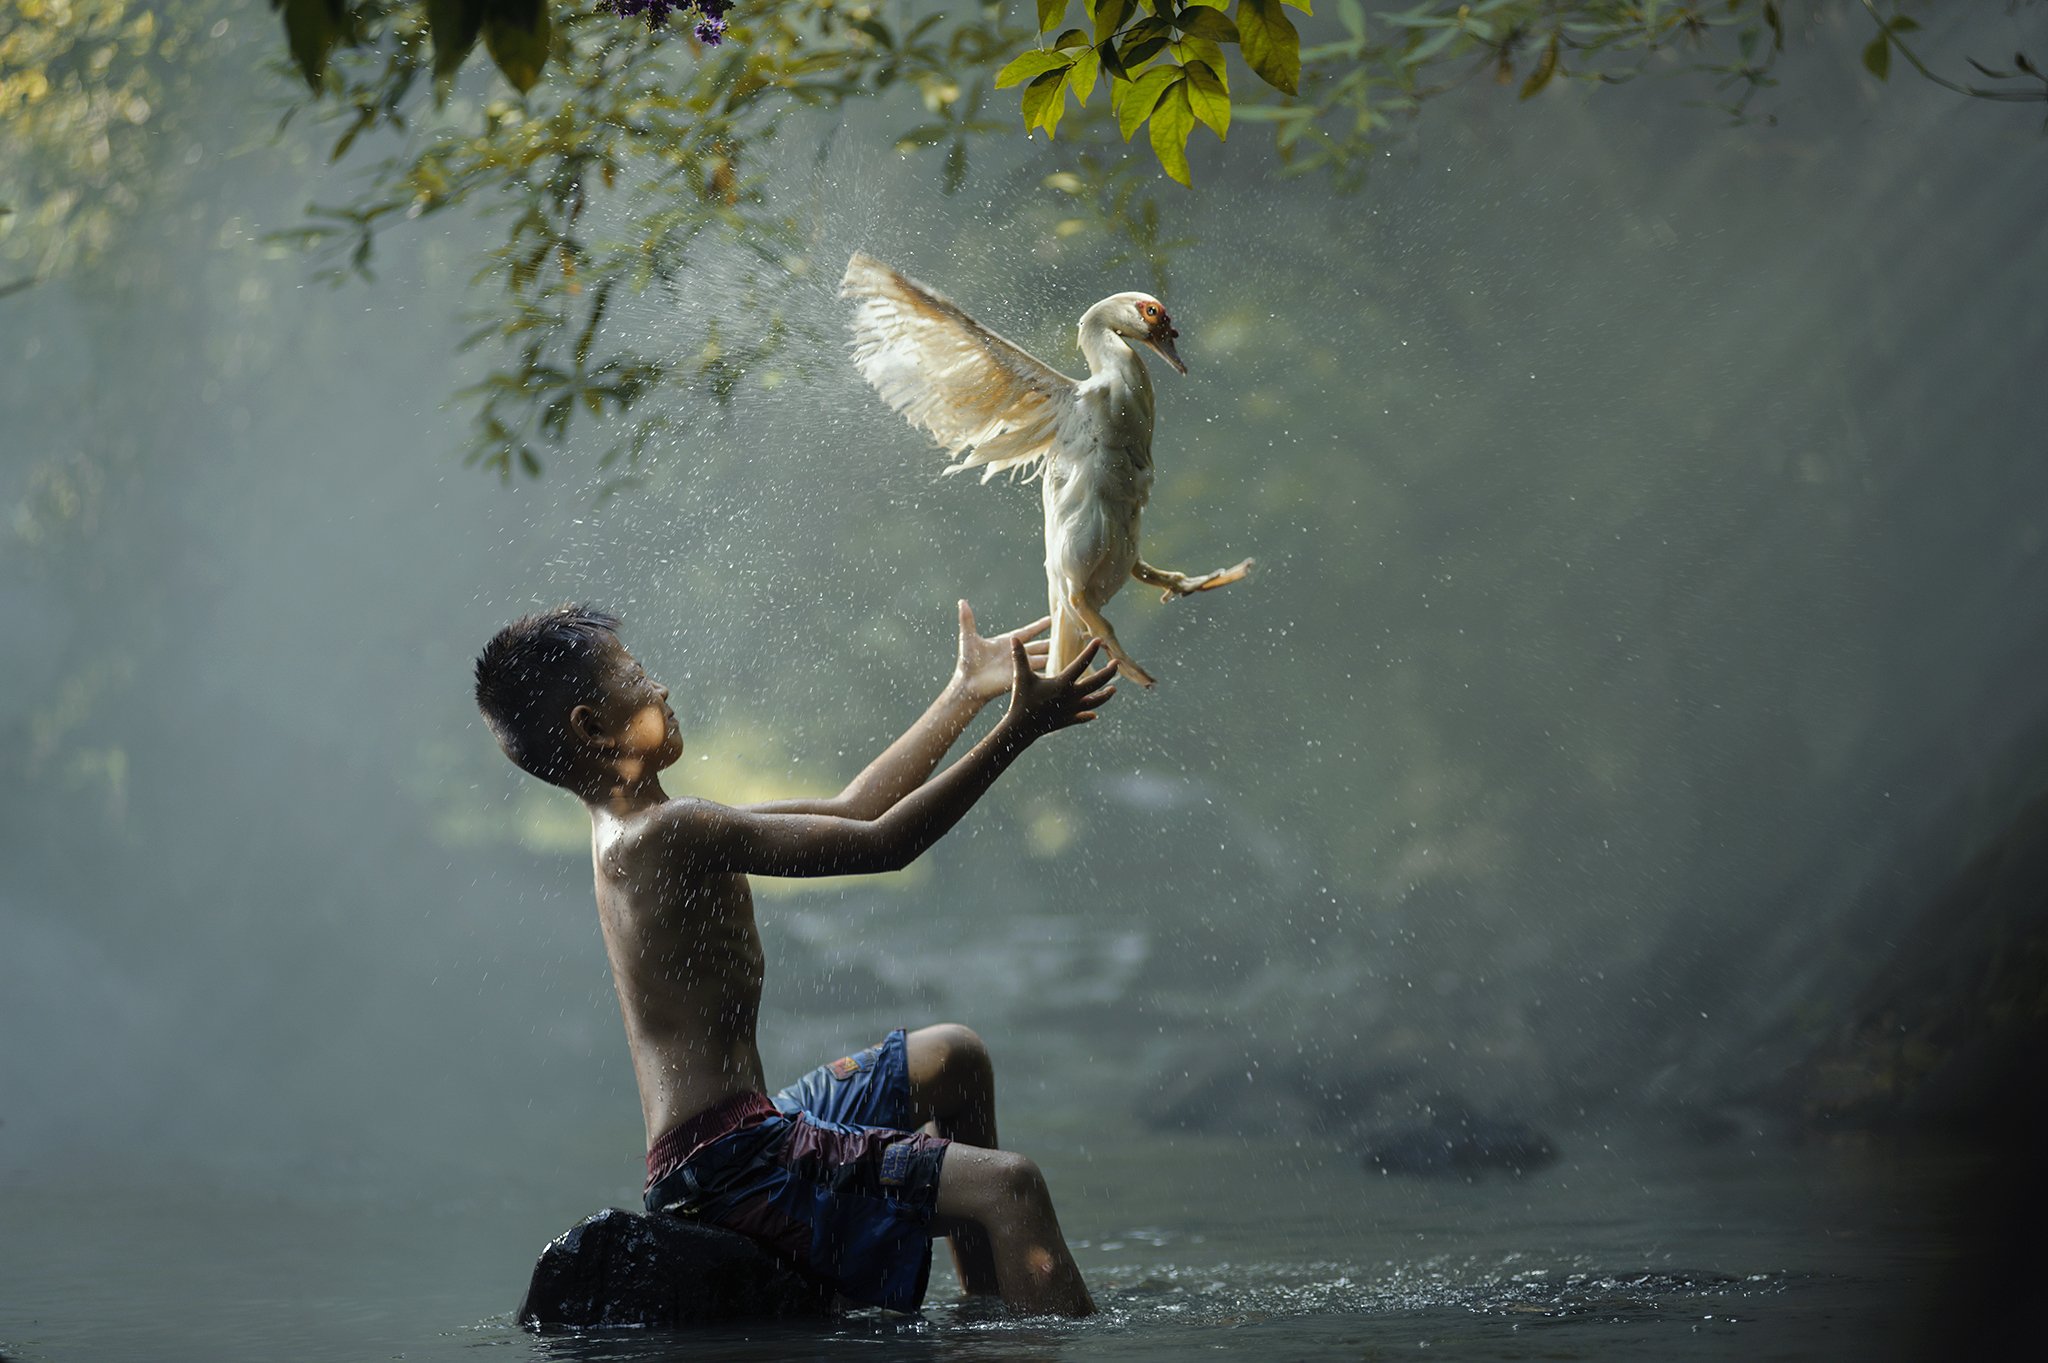 Action, Animals, Asia, Asian, Boy, Child, Children, Duck, Fun, Green, Life, Lucky, River, Water, Waterfall, Wildlife, Saravut Whanset